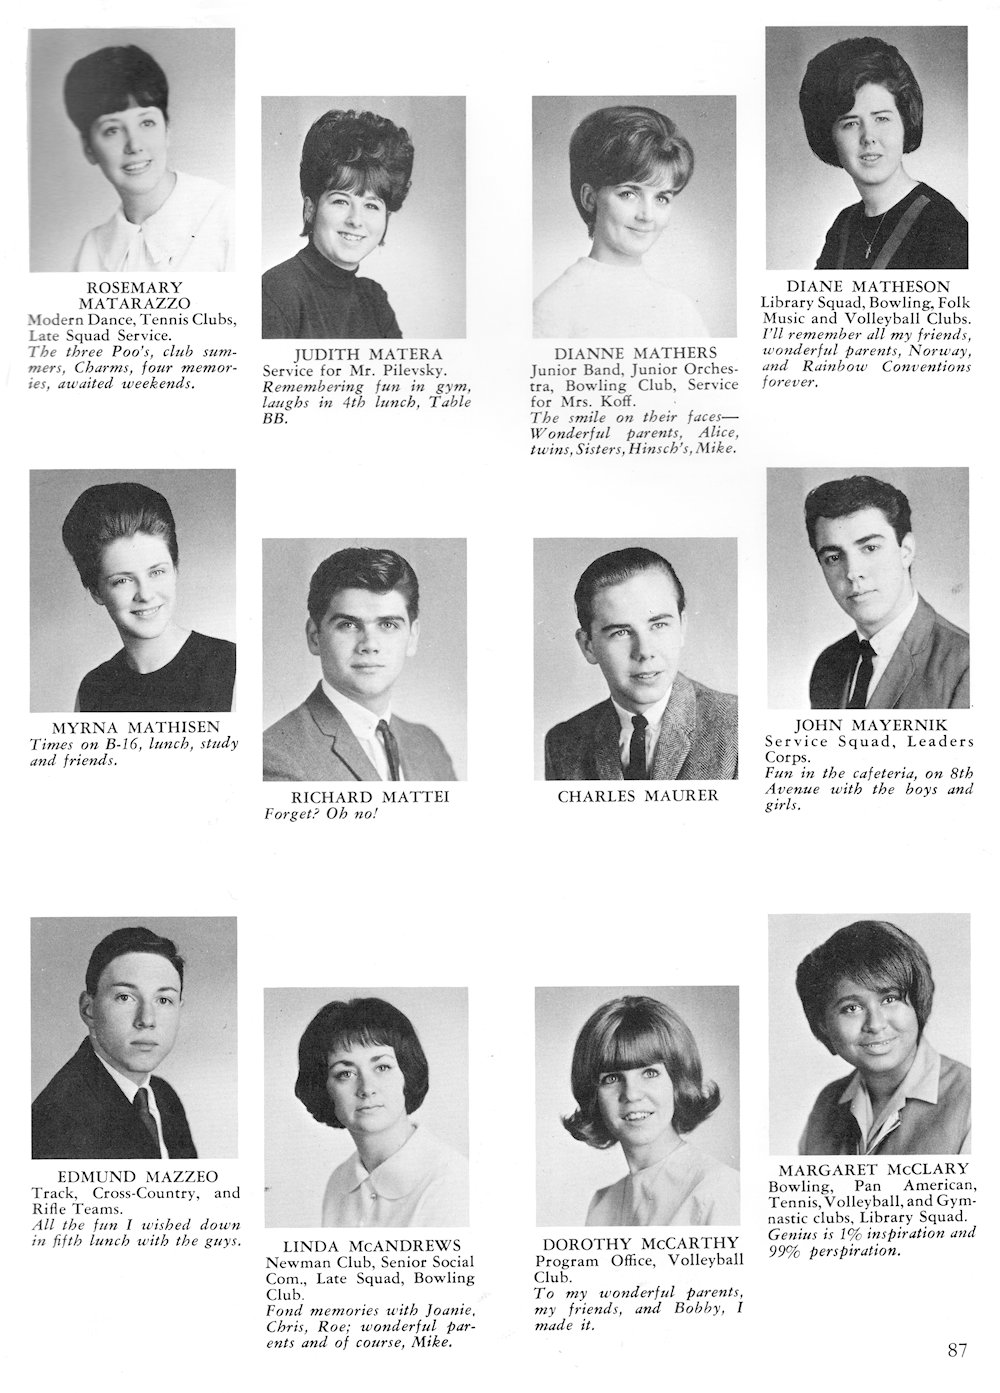 Matarazzo-McClary page from Fort Hamilton High School 1965